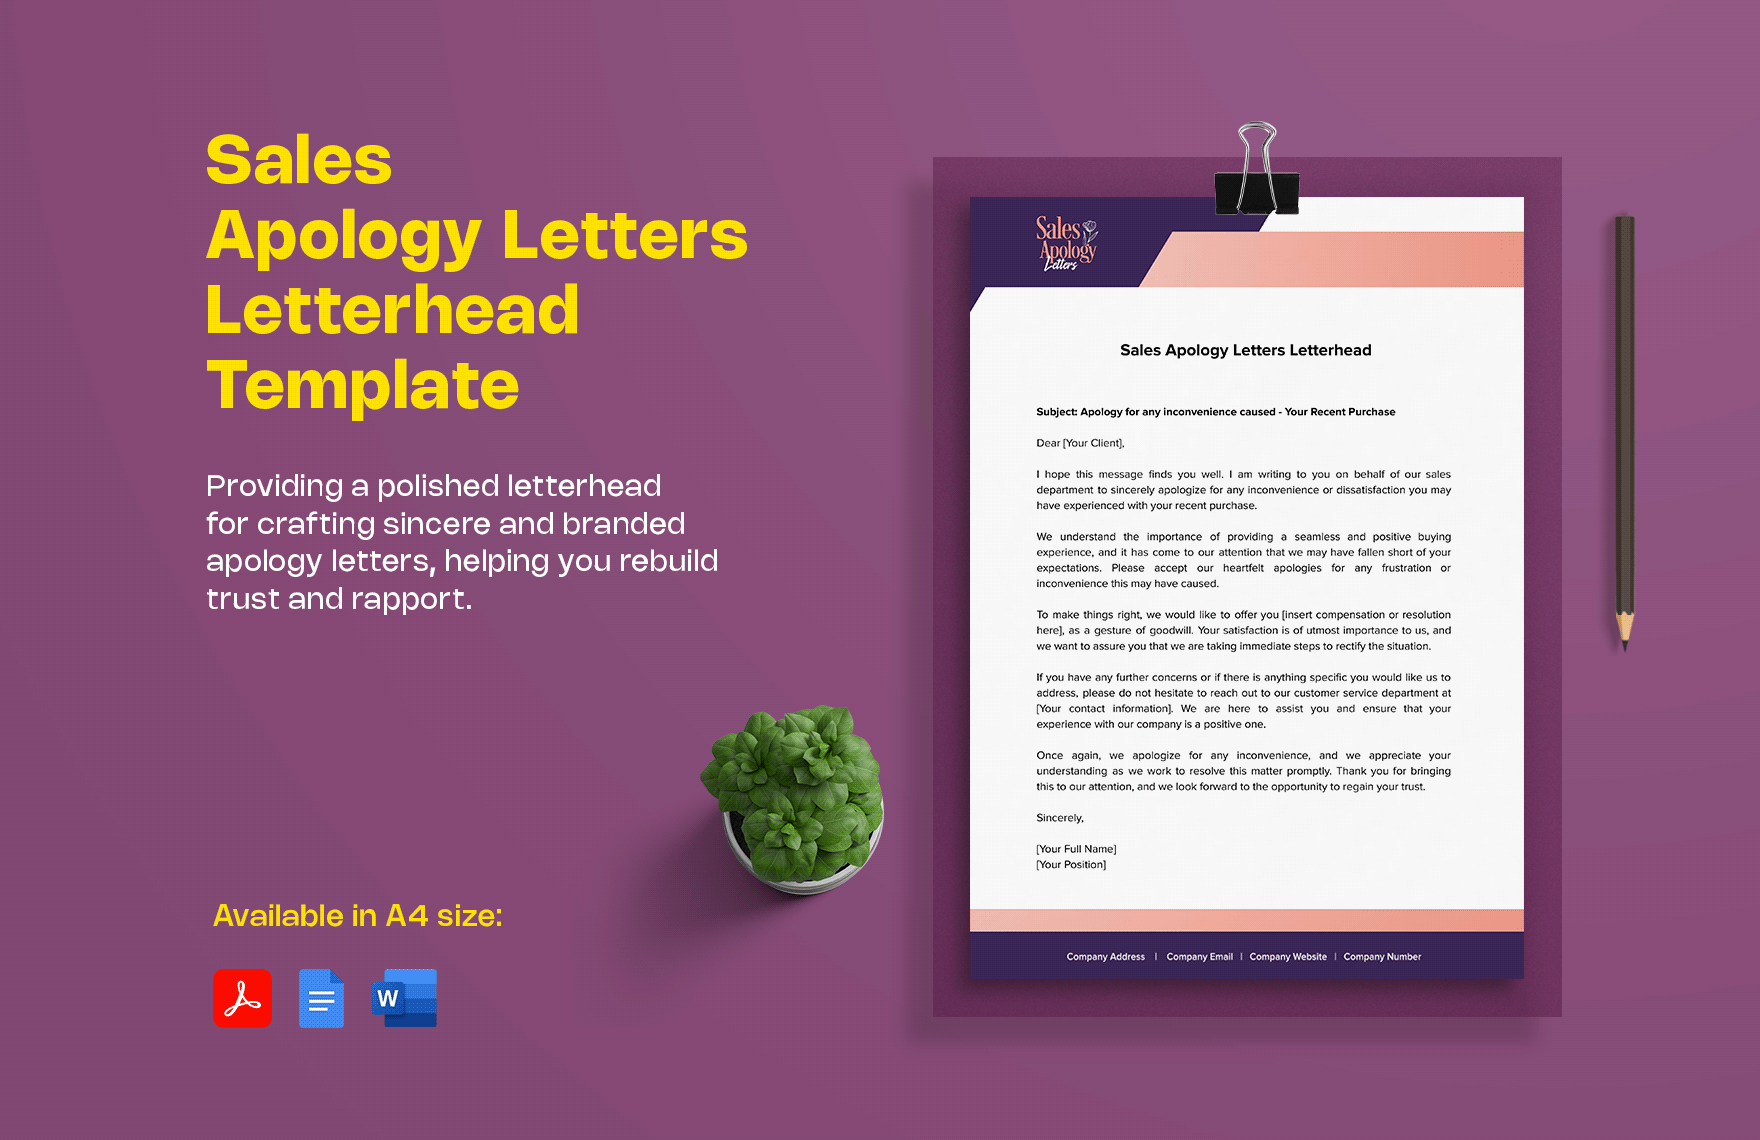 Sales Apology Letters Letterhead Template